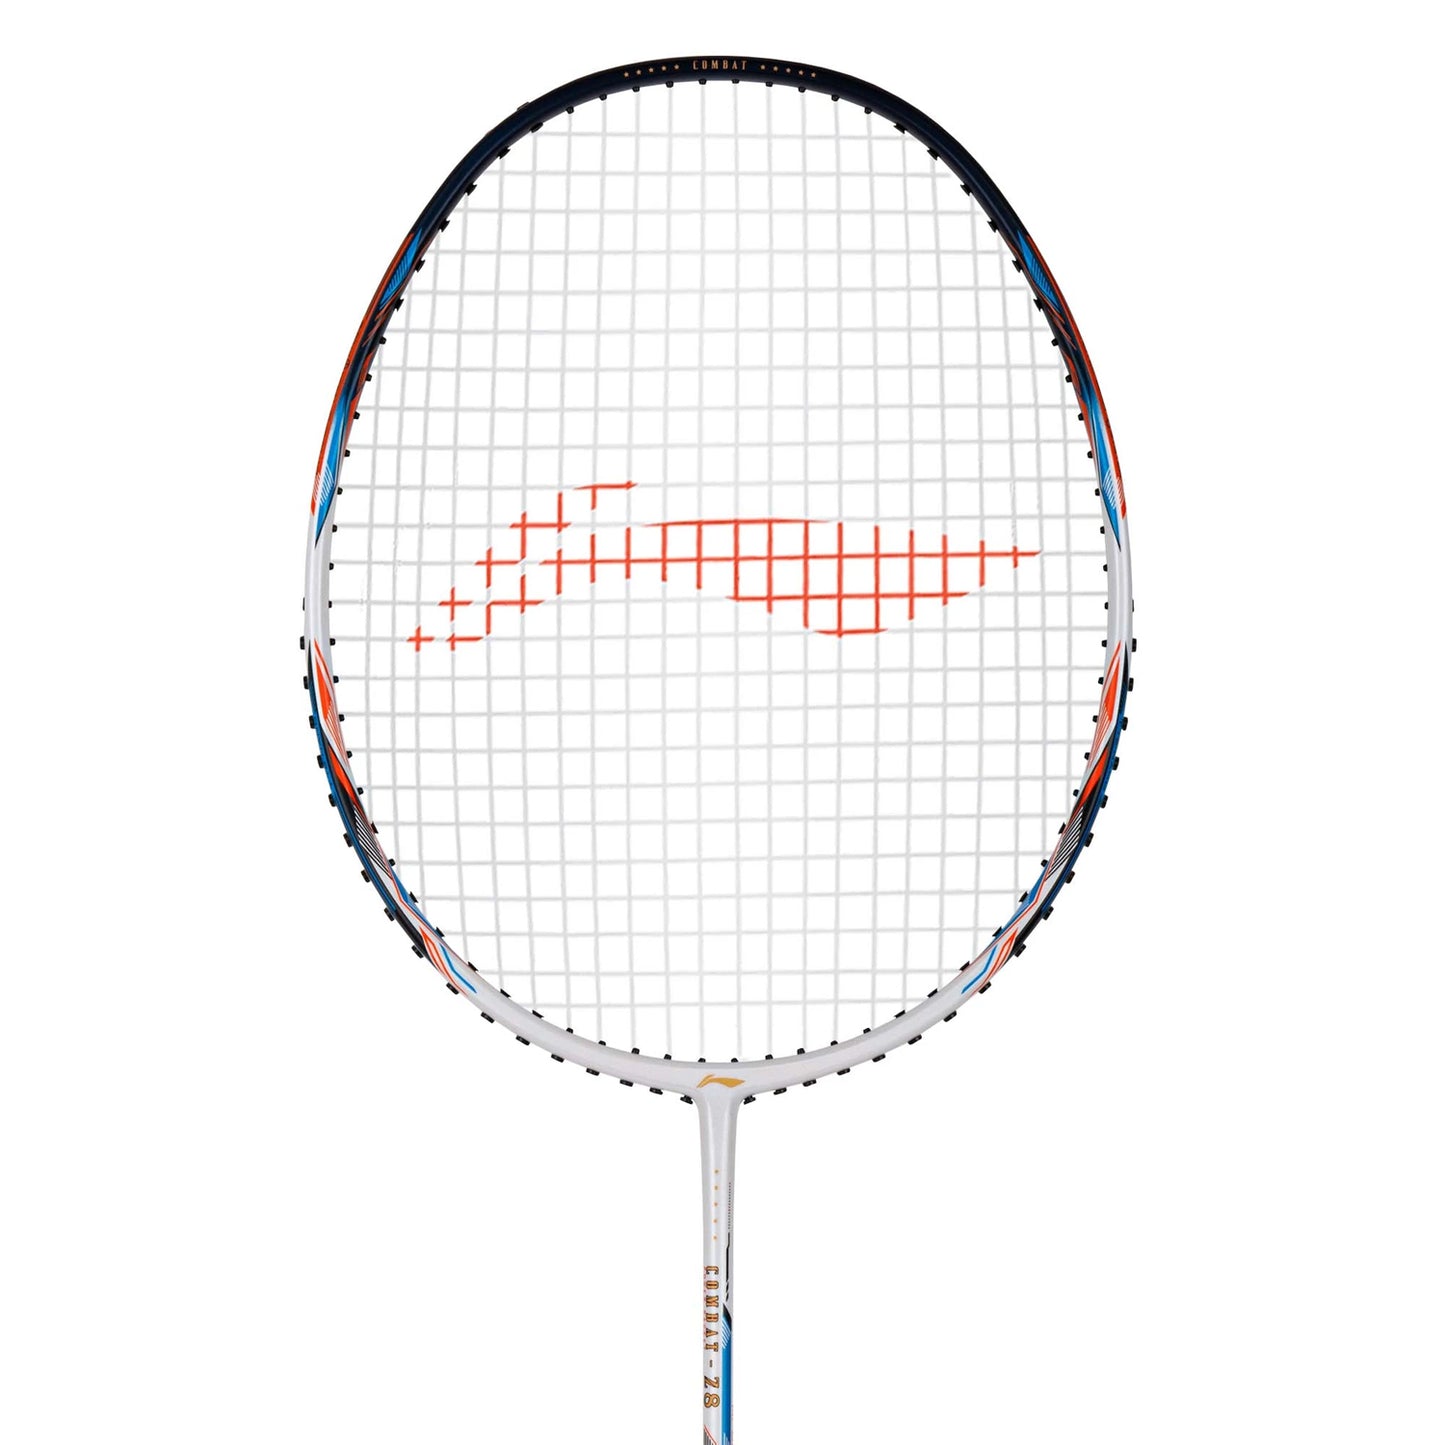 Li-Ning Combat Z8 Strung Badminton Racquet, 84g - Best Price online Prokicksports.com